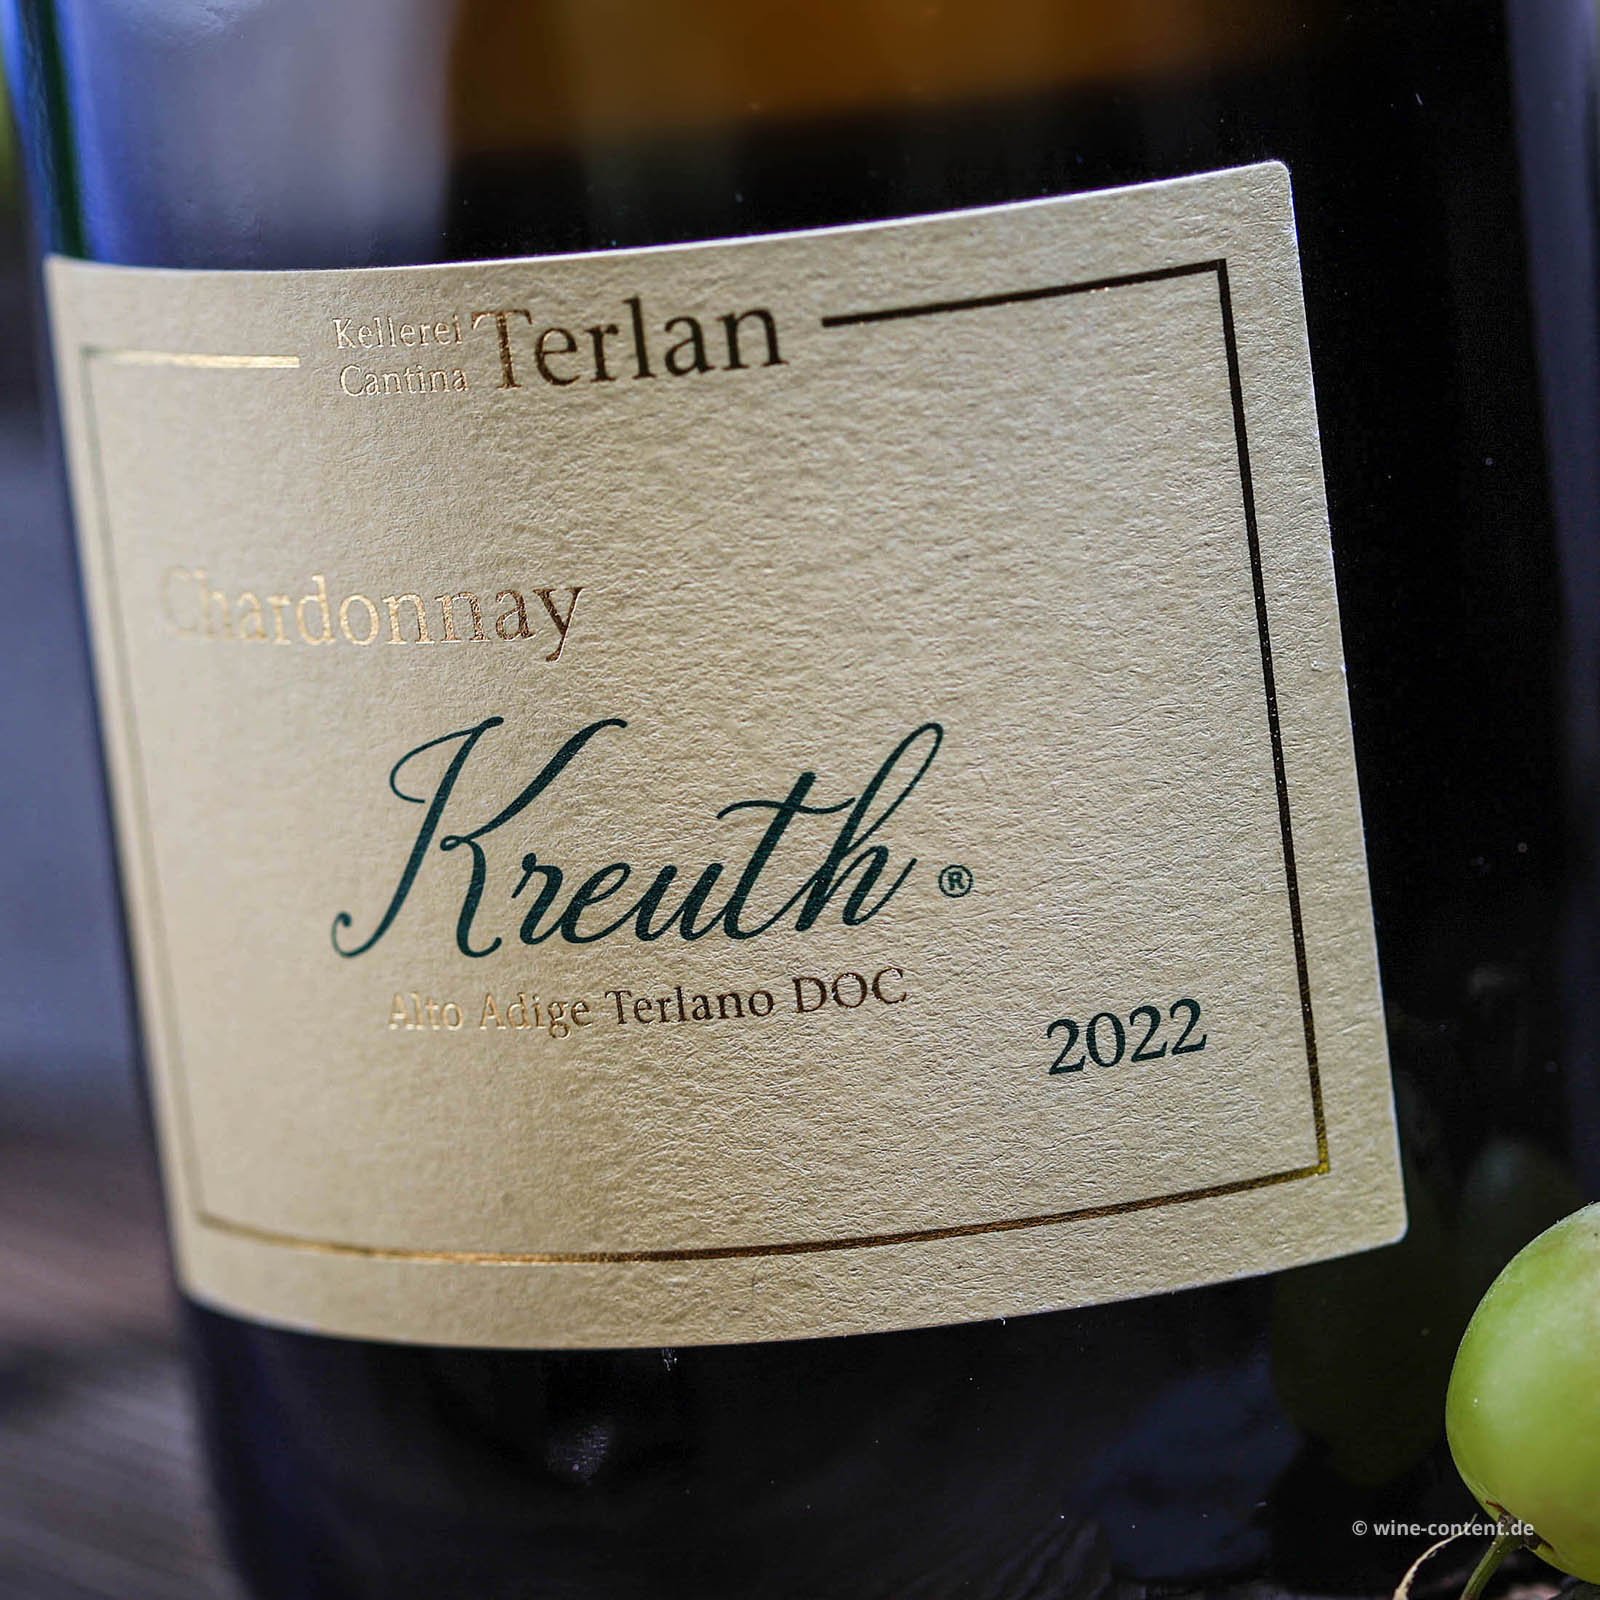 Chardonnay 2022 Kreuth